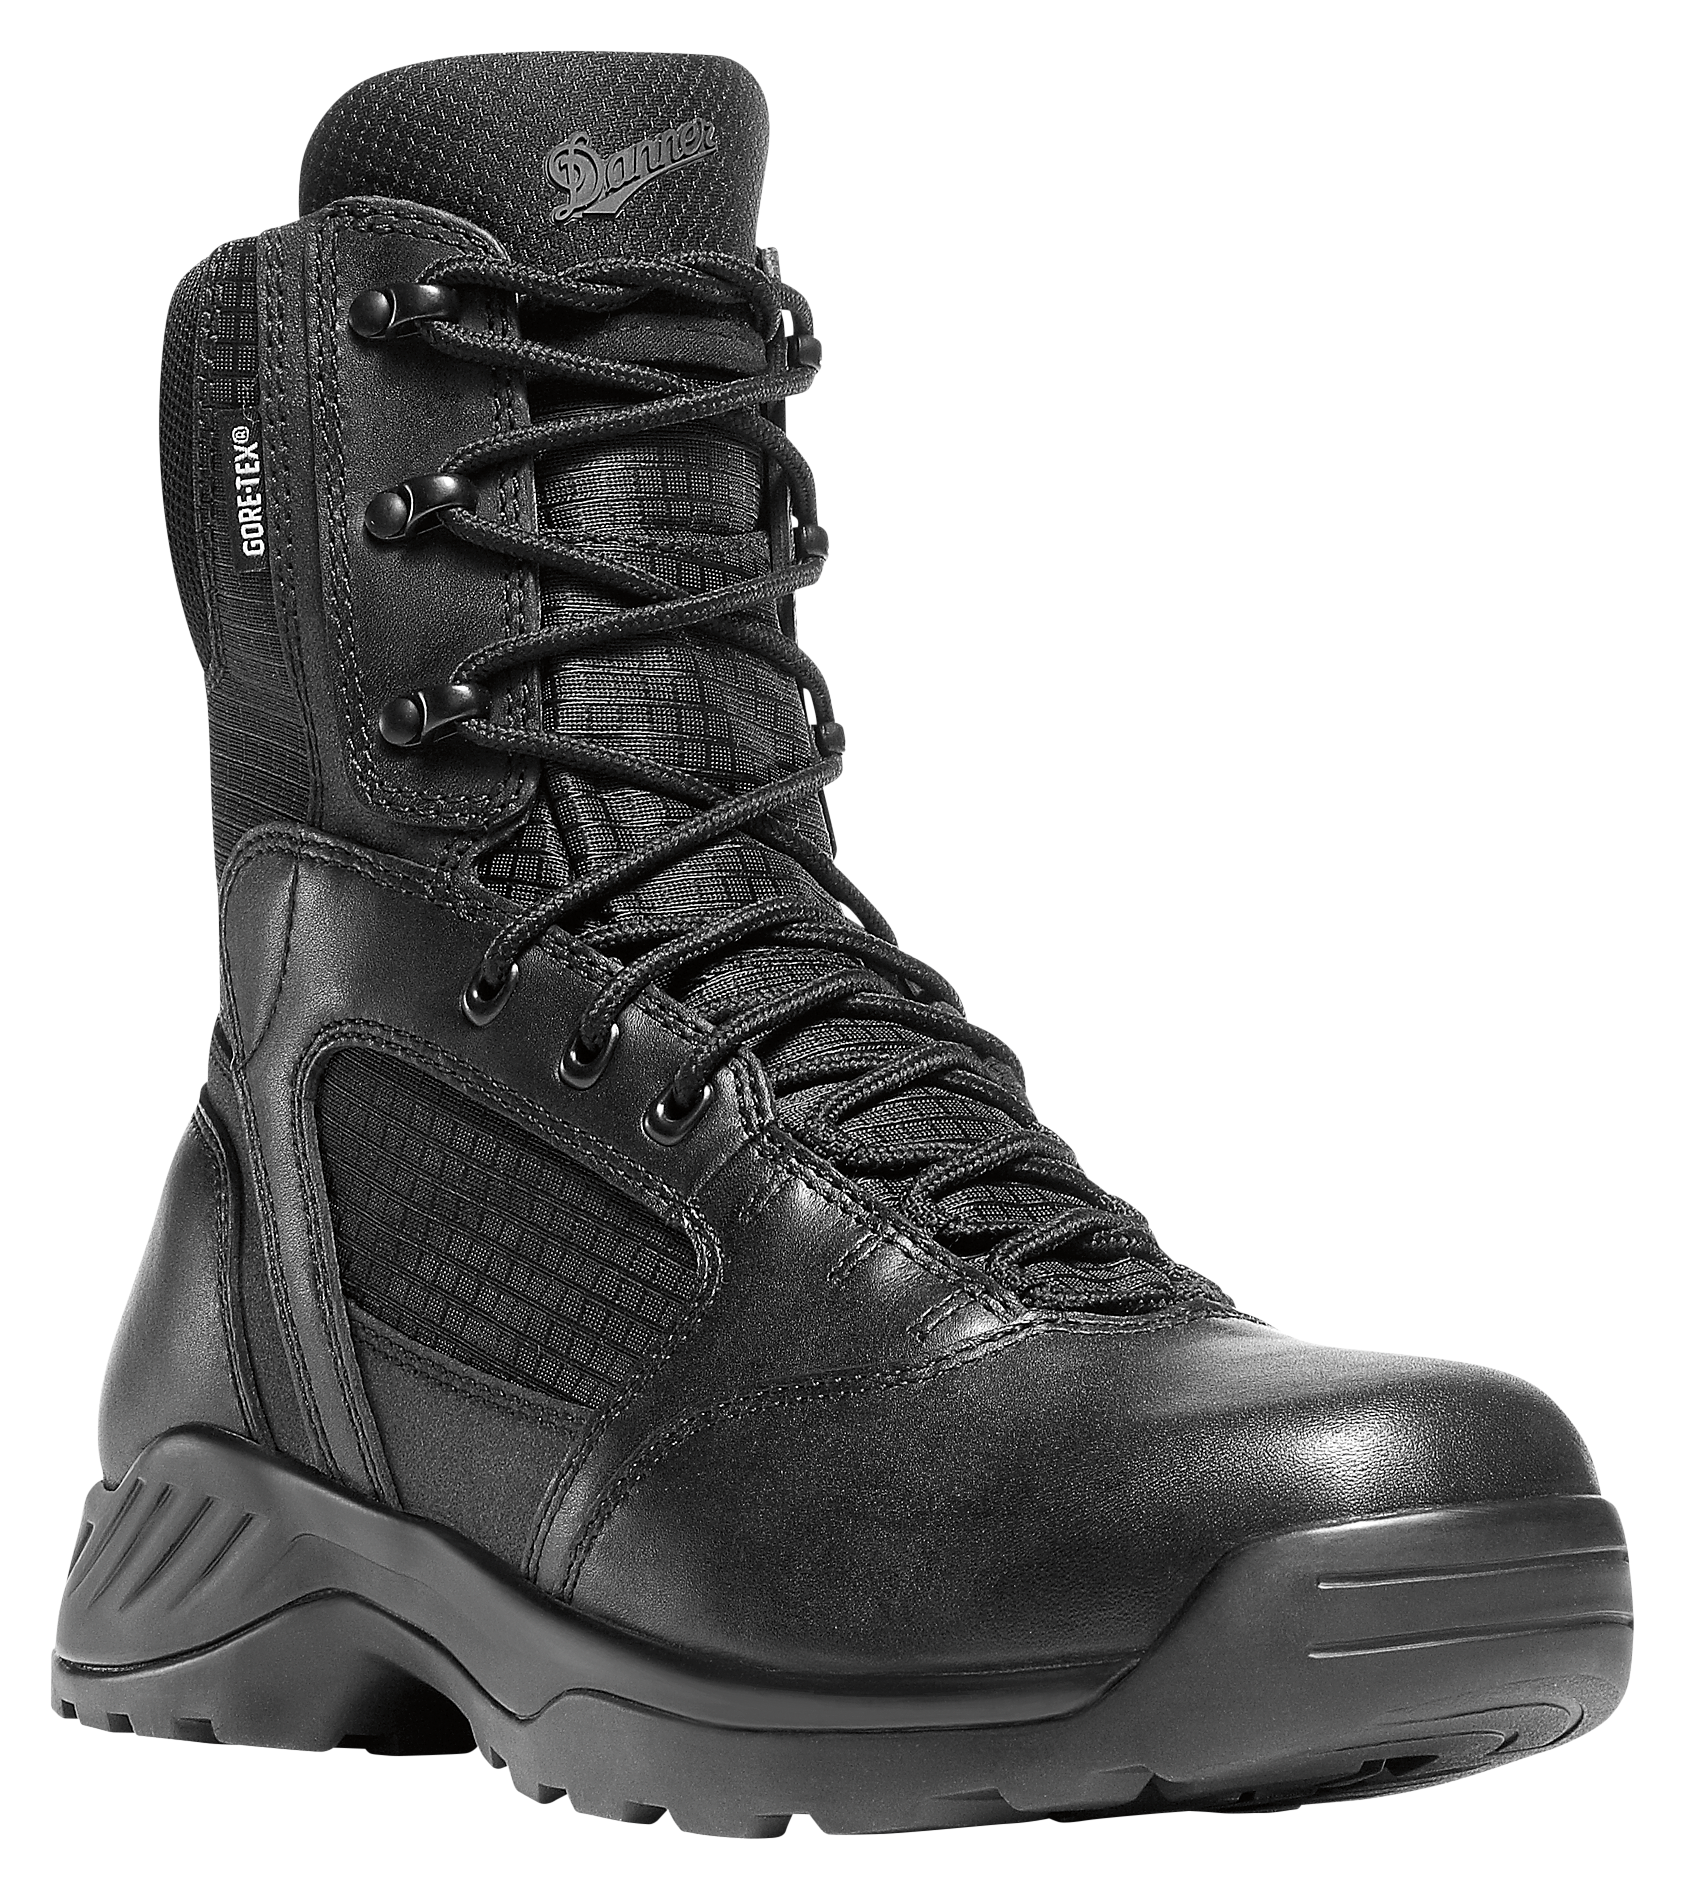 Danner Kinetic GTX Side-Zip Waterproof Tactical Duty Boots for Men - Black - 12W